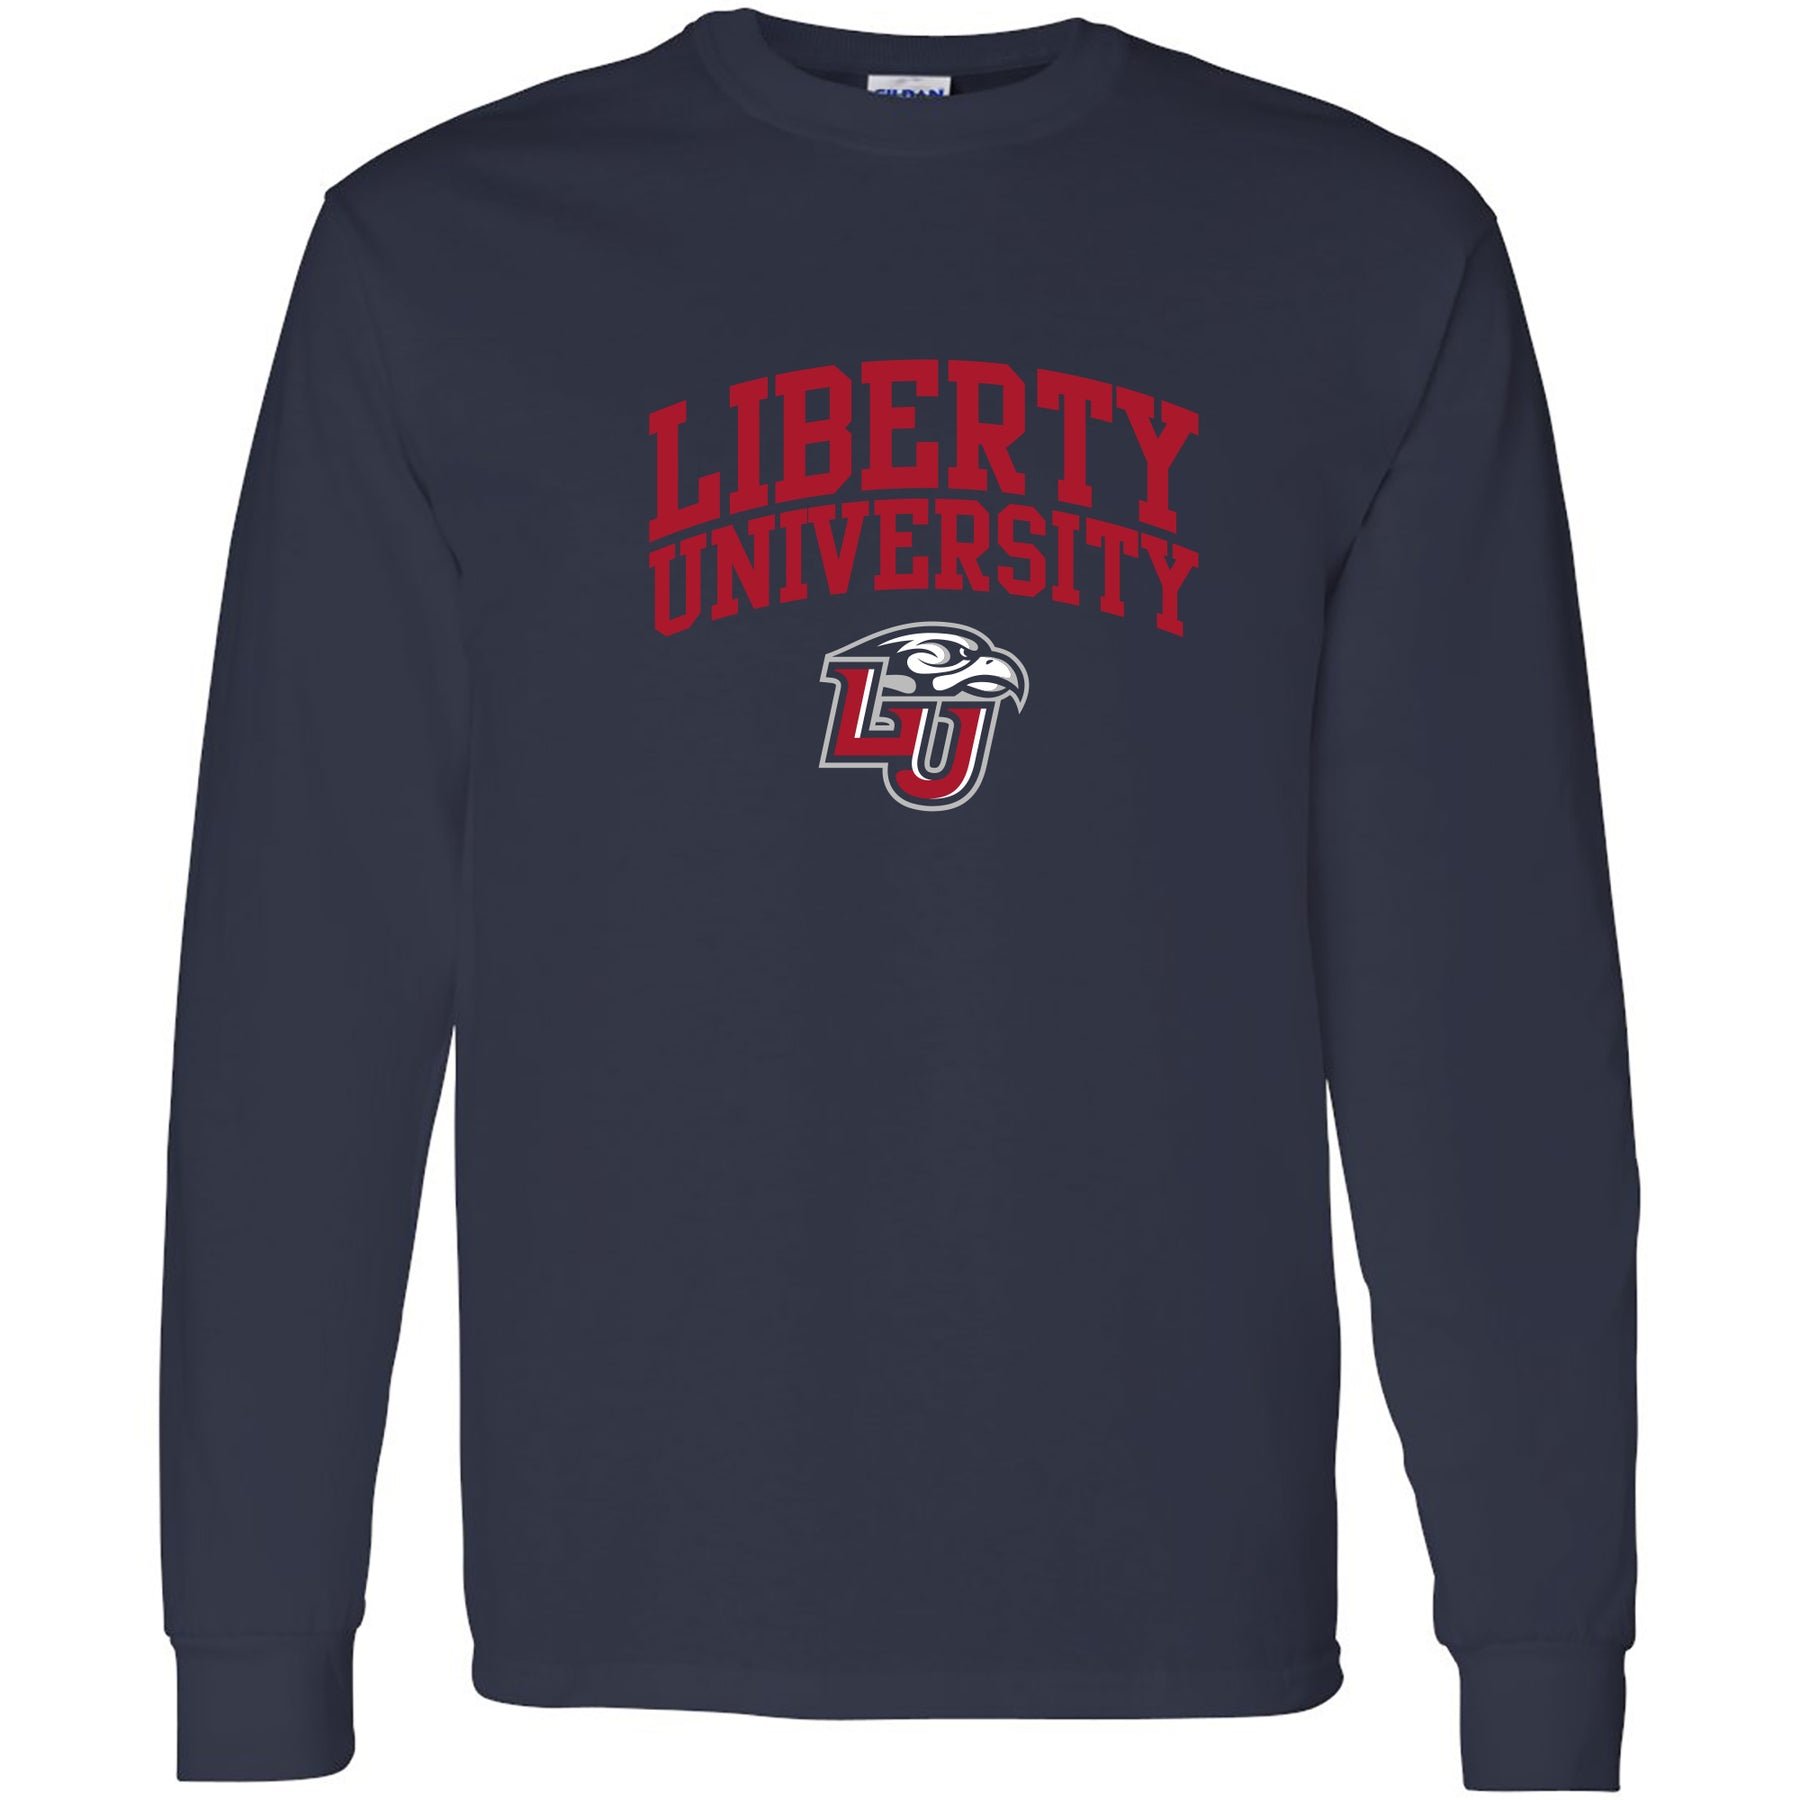 liberty university nike apparel